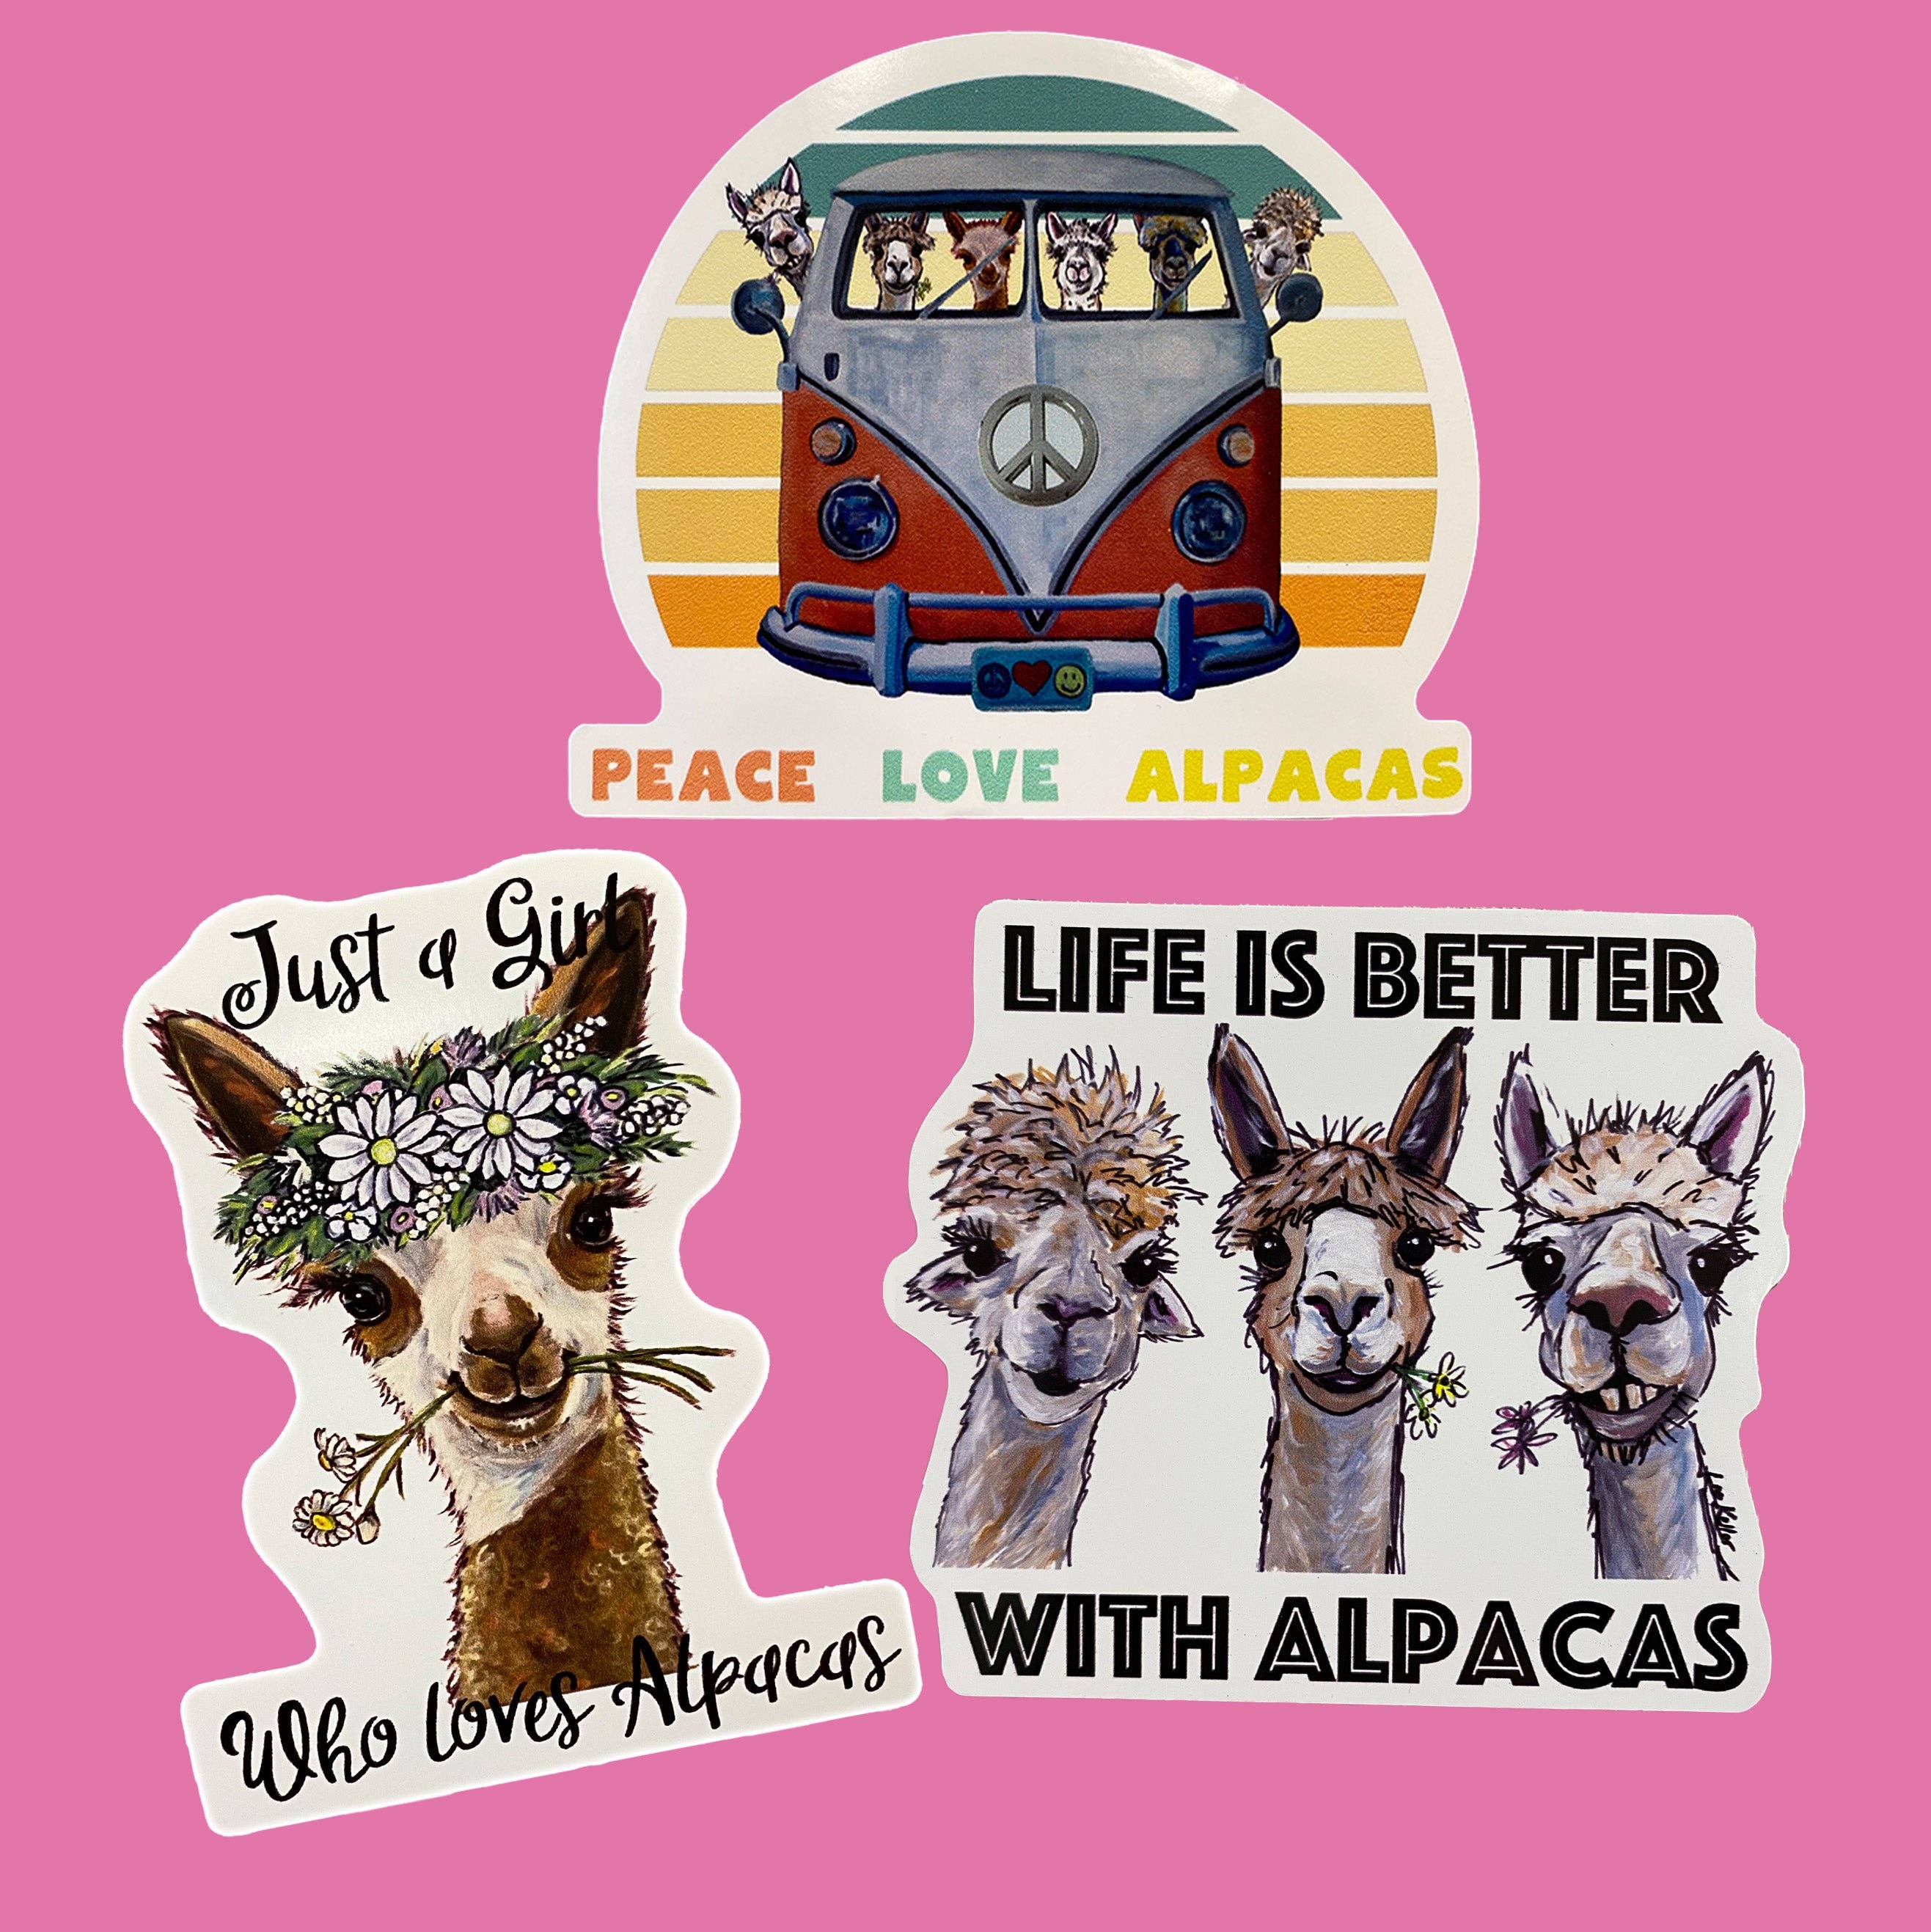 Alpaca Sticker Kawaii Sticker Sheet Happy Mail Stickers Cute Sticker Pack Sporty Ray & Sweet Coco Sheep Stickers Sticker Bundle